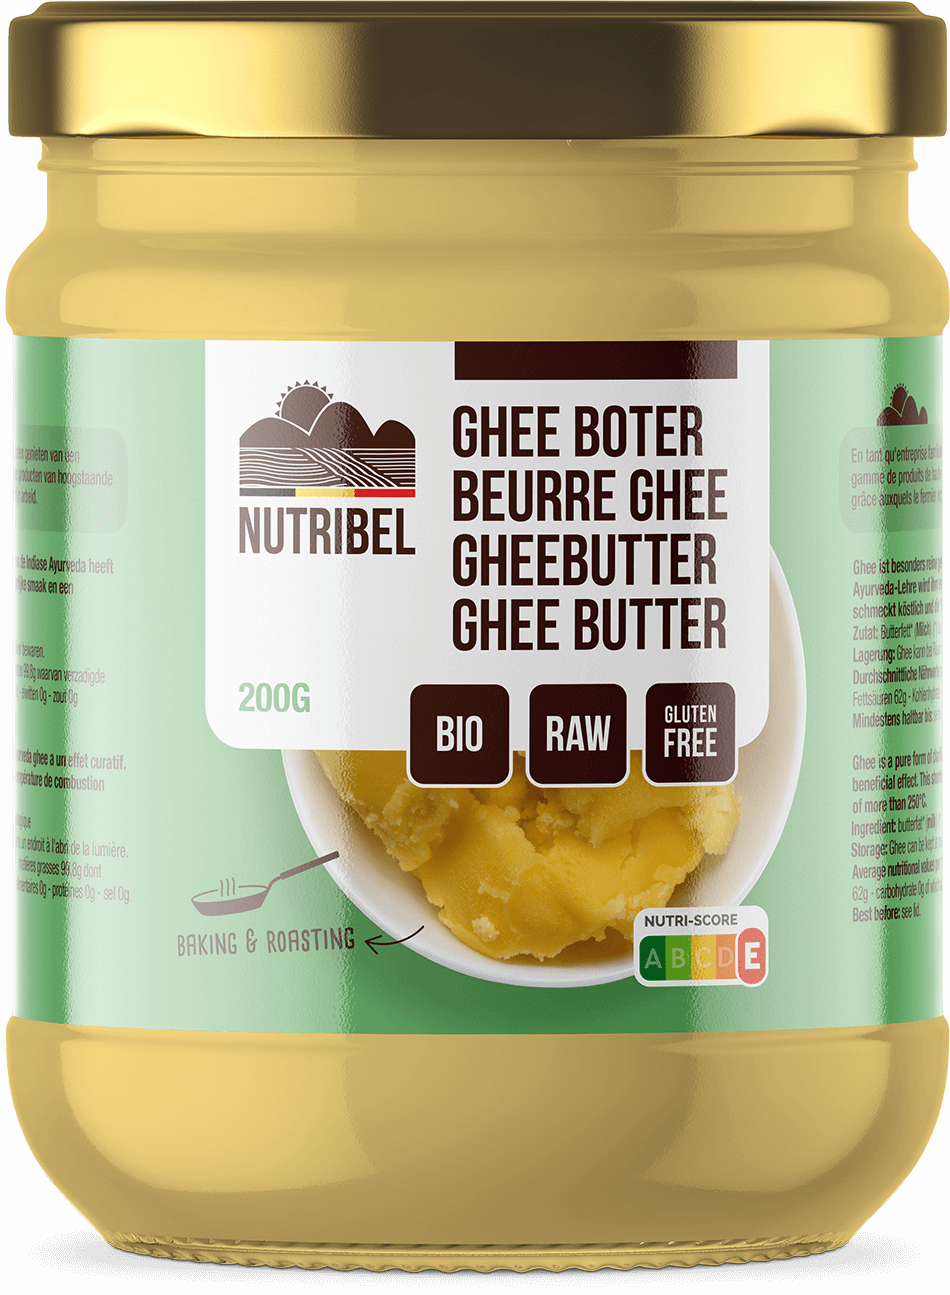 Nutribel Ghee boter bio 200g